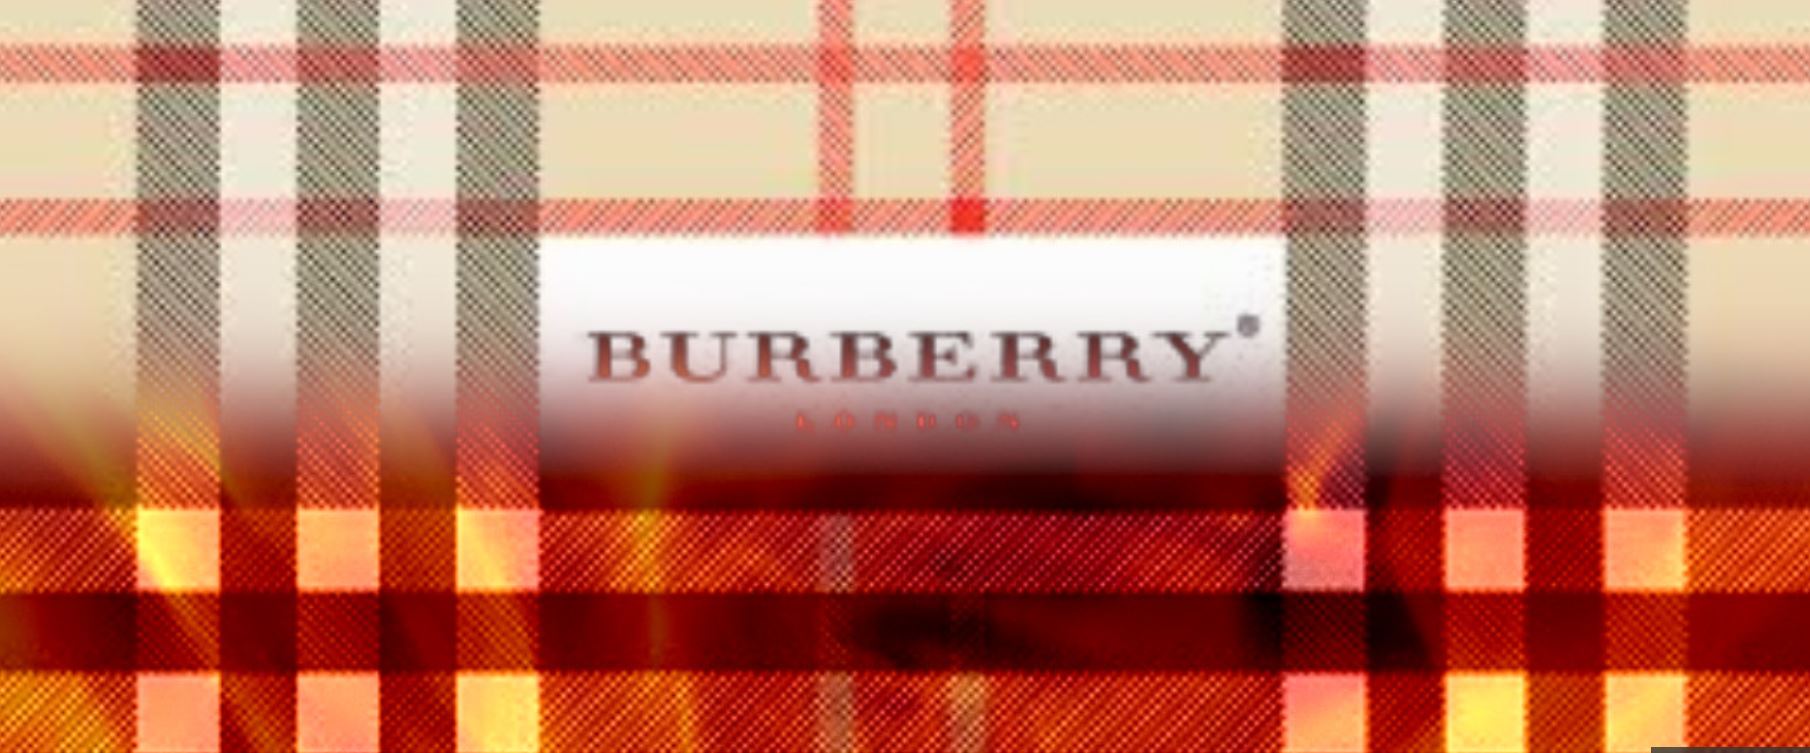 burberry burn